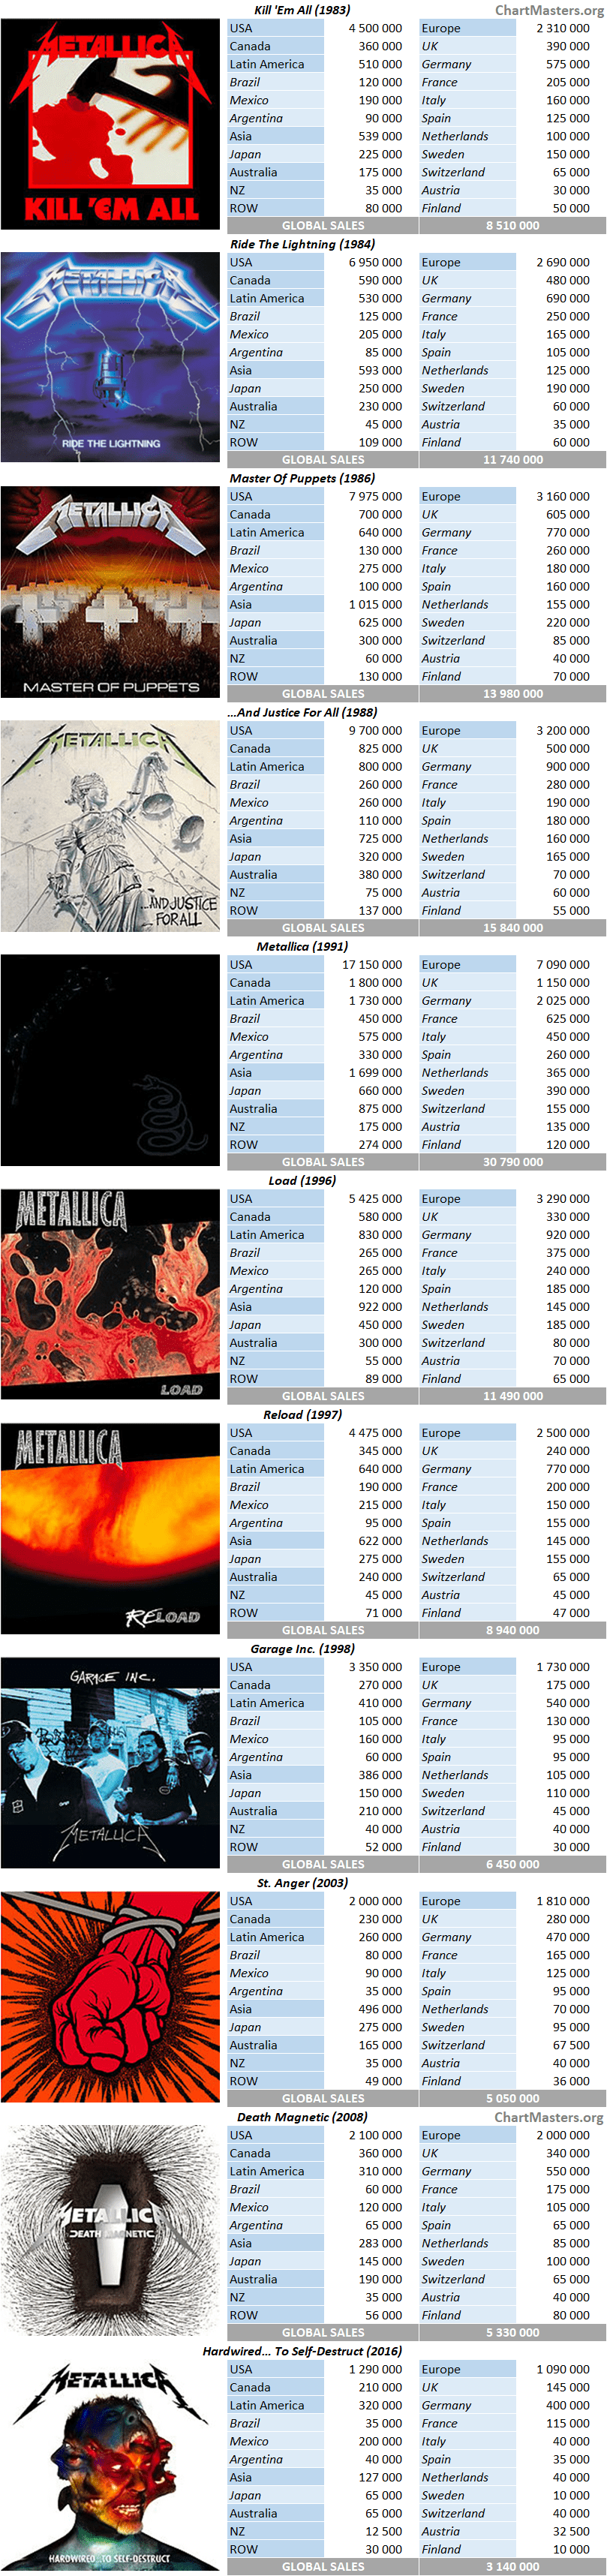 CSPC Metallica Album sales breakdowns